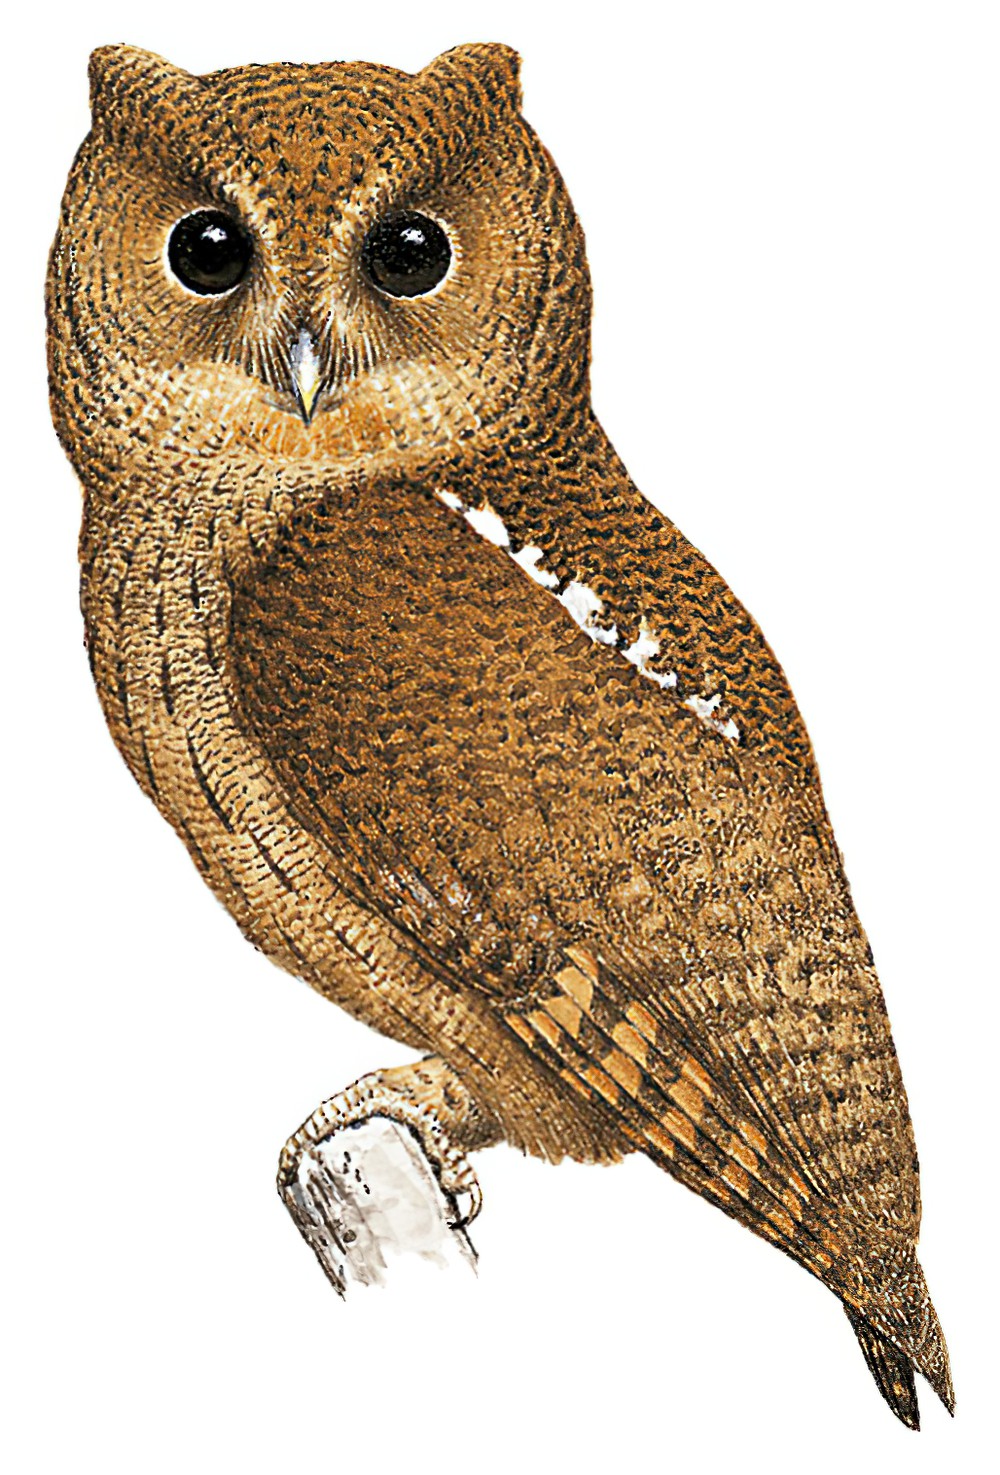 Rufescent Screech-Owl / Megascops ingens